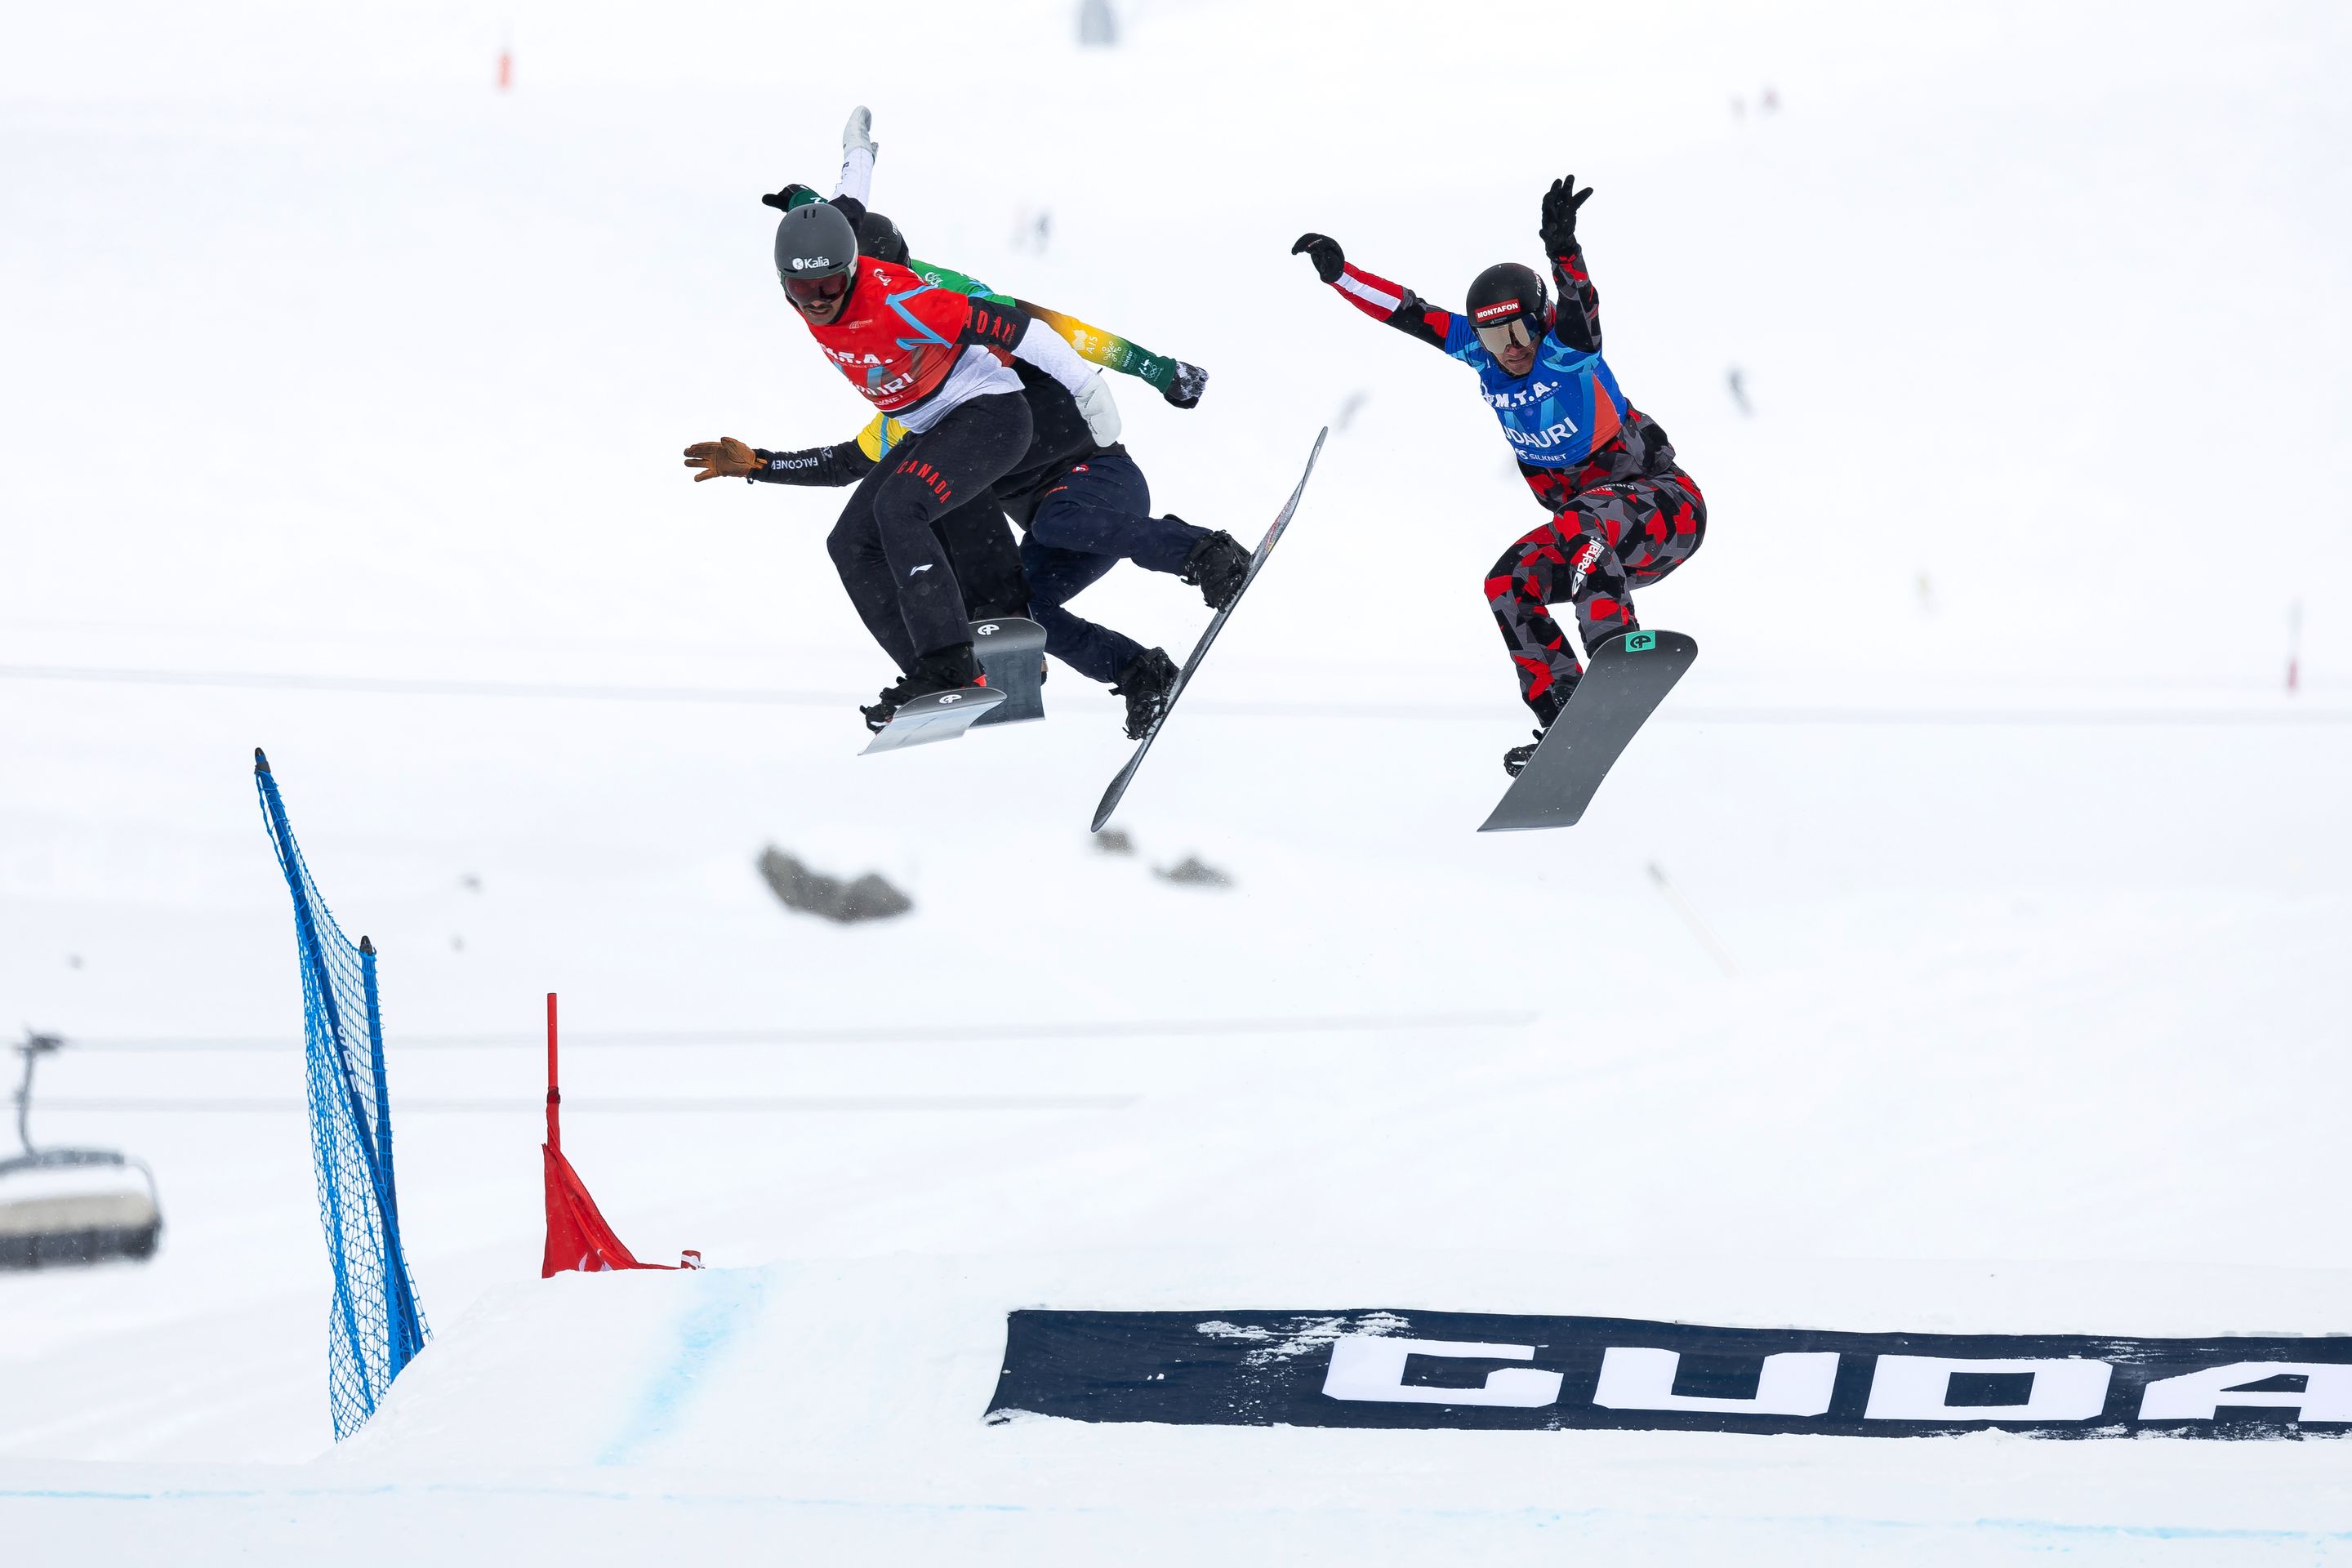 Racers soar through the air towards the finish. © Miha Matavz/FIS